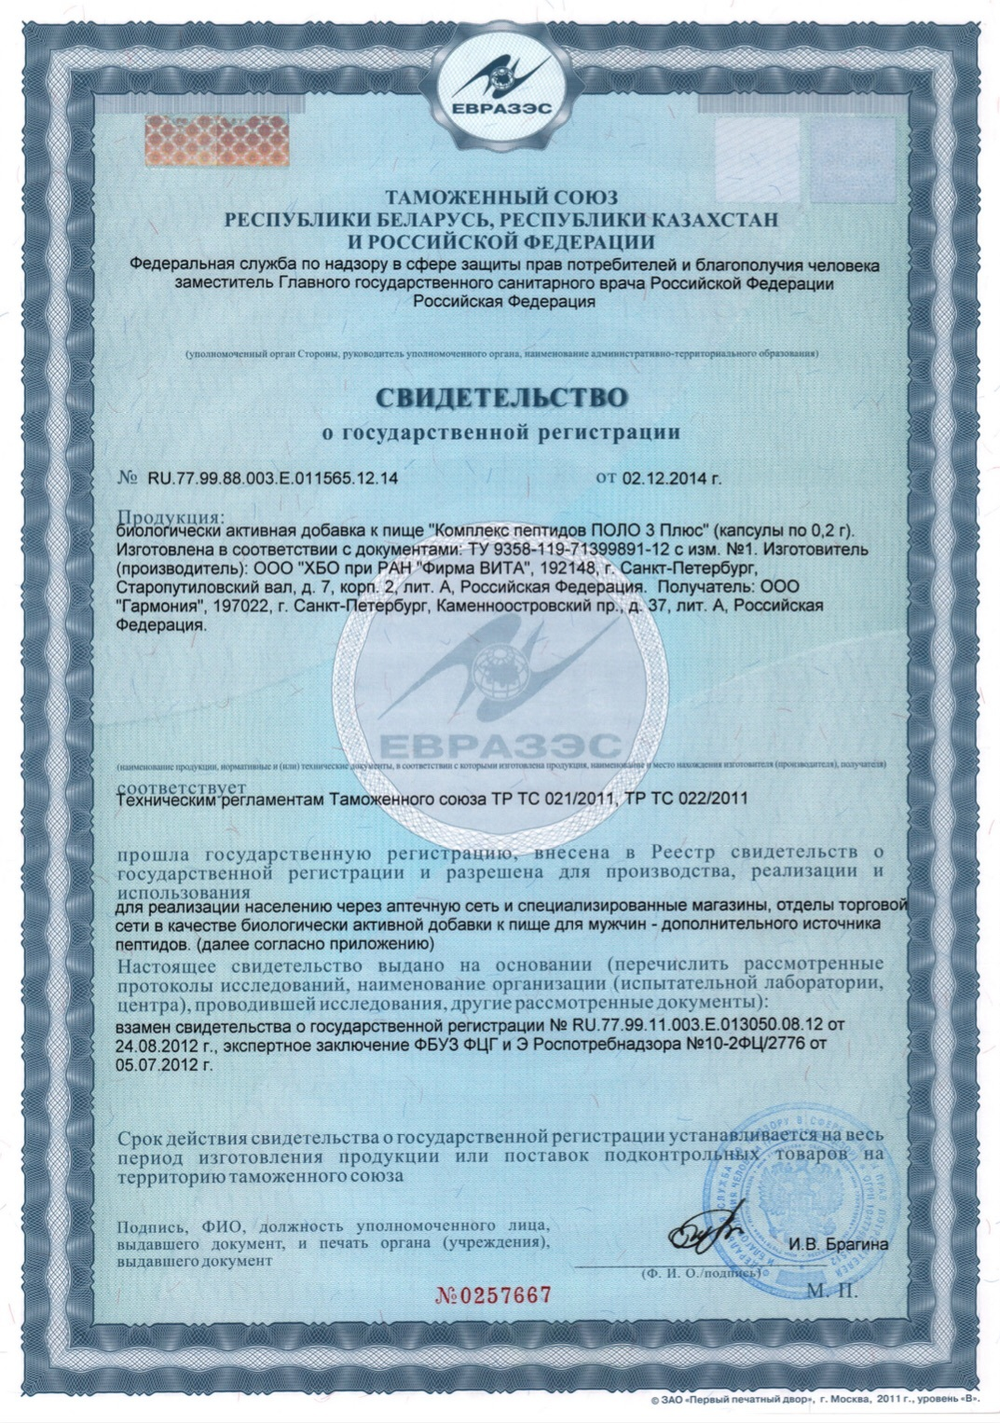 POLO 3 Plus® пептидный комплекс сертификат